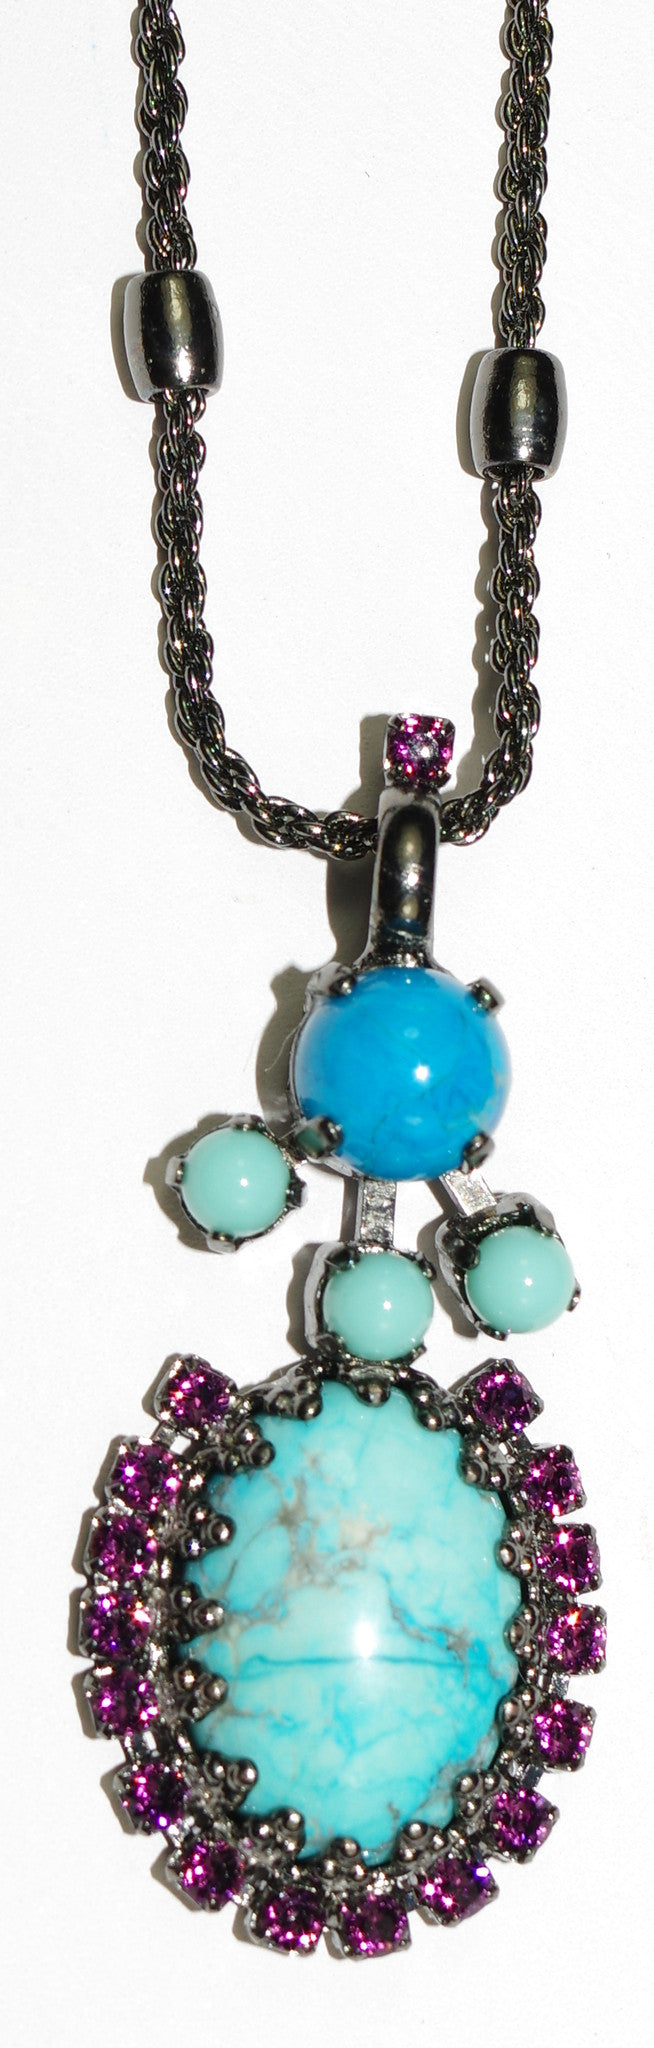 MARIANA PENDANT HAPPINESS: turq, purple, blue stones in 1.5" black gold setting, 20" adjustable chain